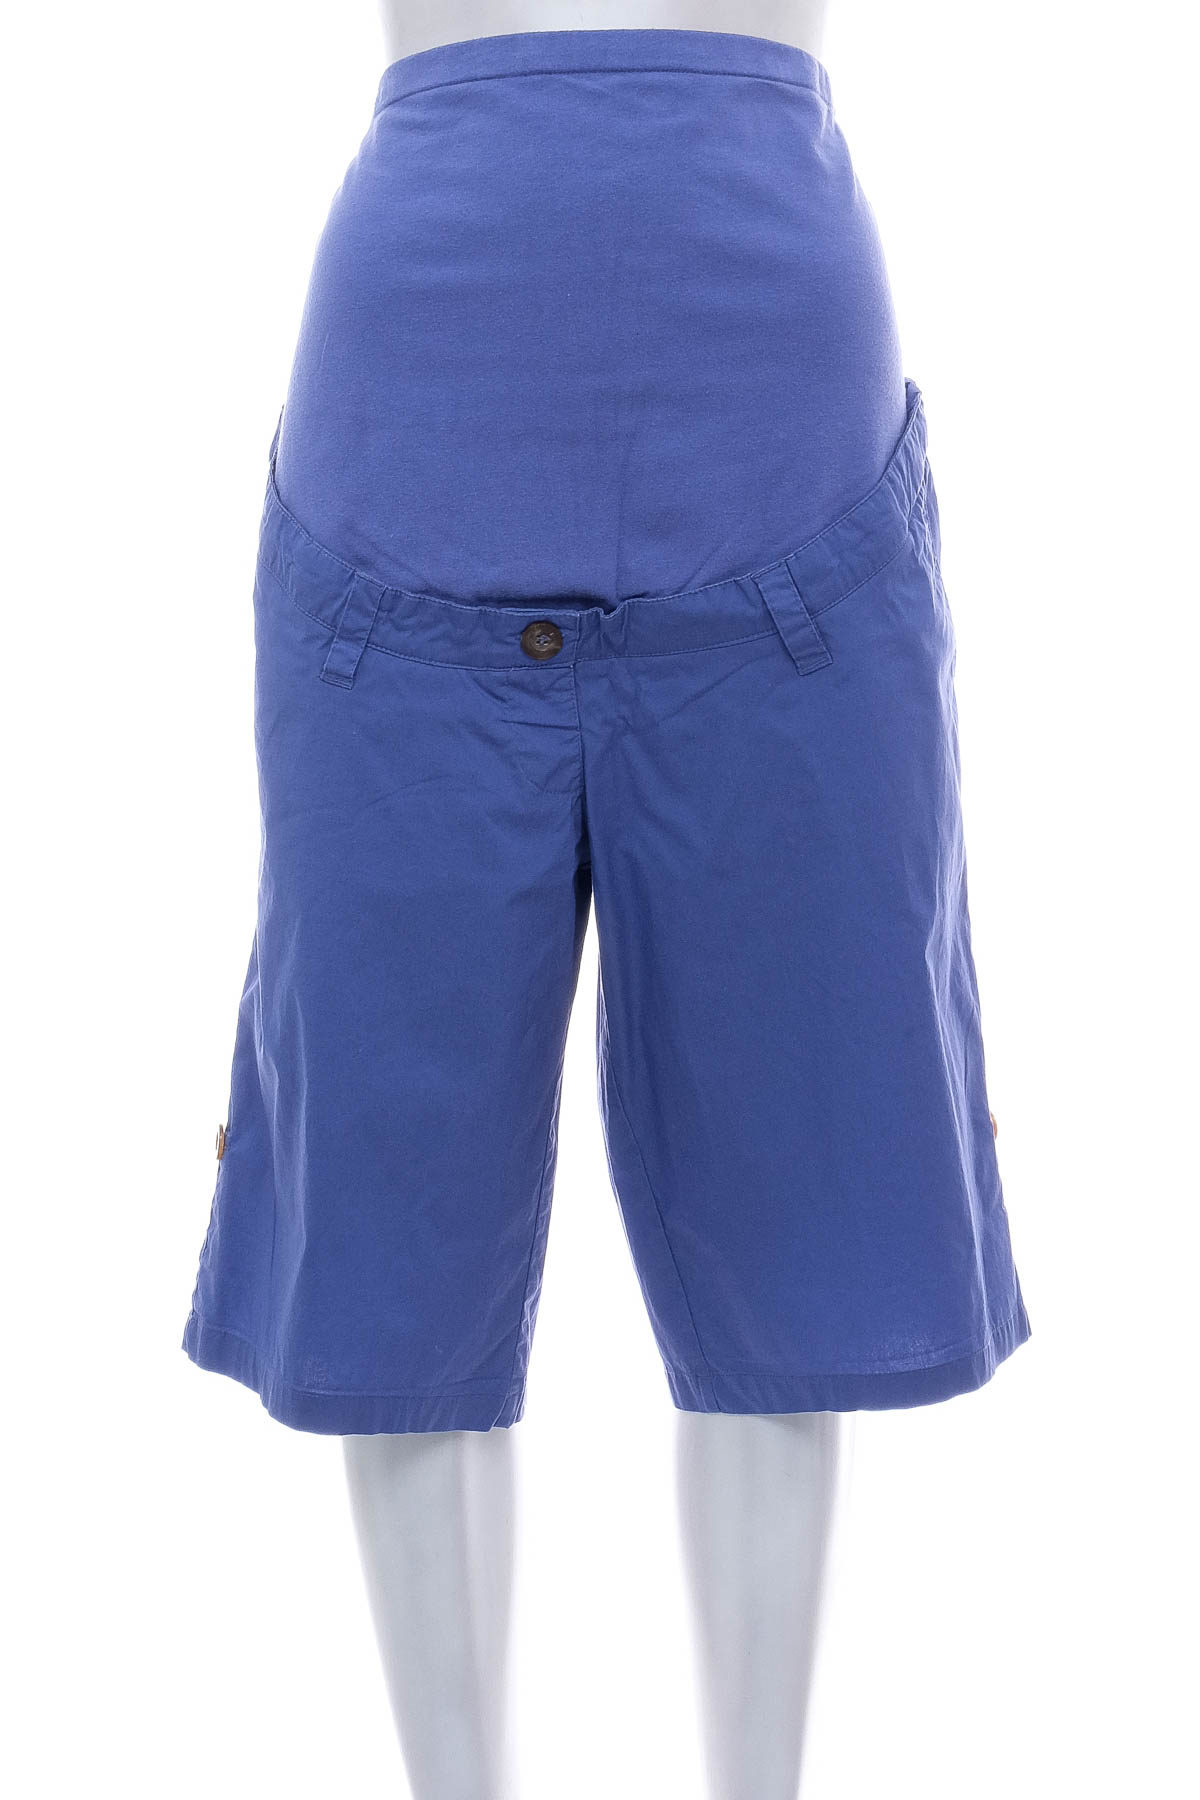 Female shorts for pregnant women - Bpc Bonprix Collection - 0